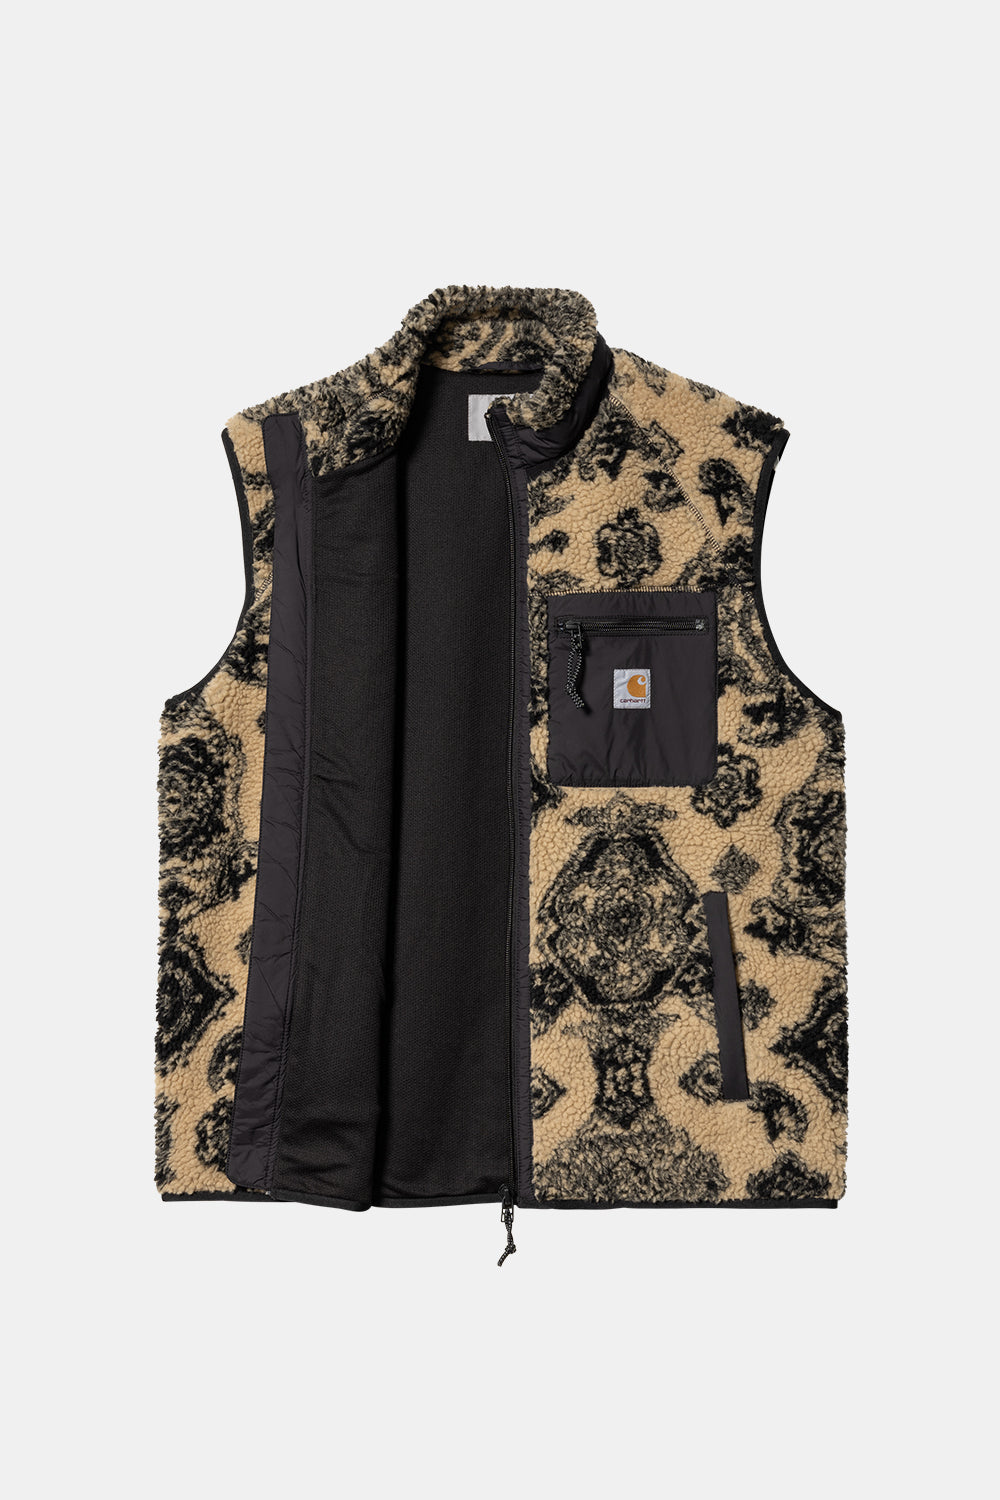 Carhartt WIP Prentis Vest Liner Verse Jacquard Fleece (Dusty Brown &amp; Scoot Black)